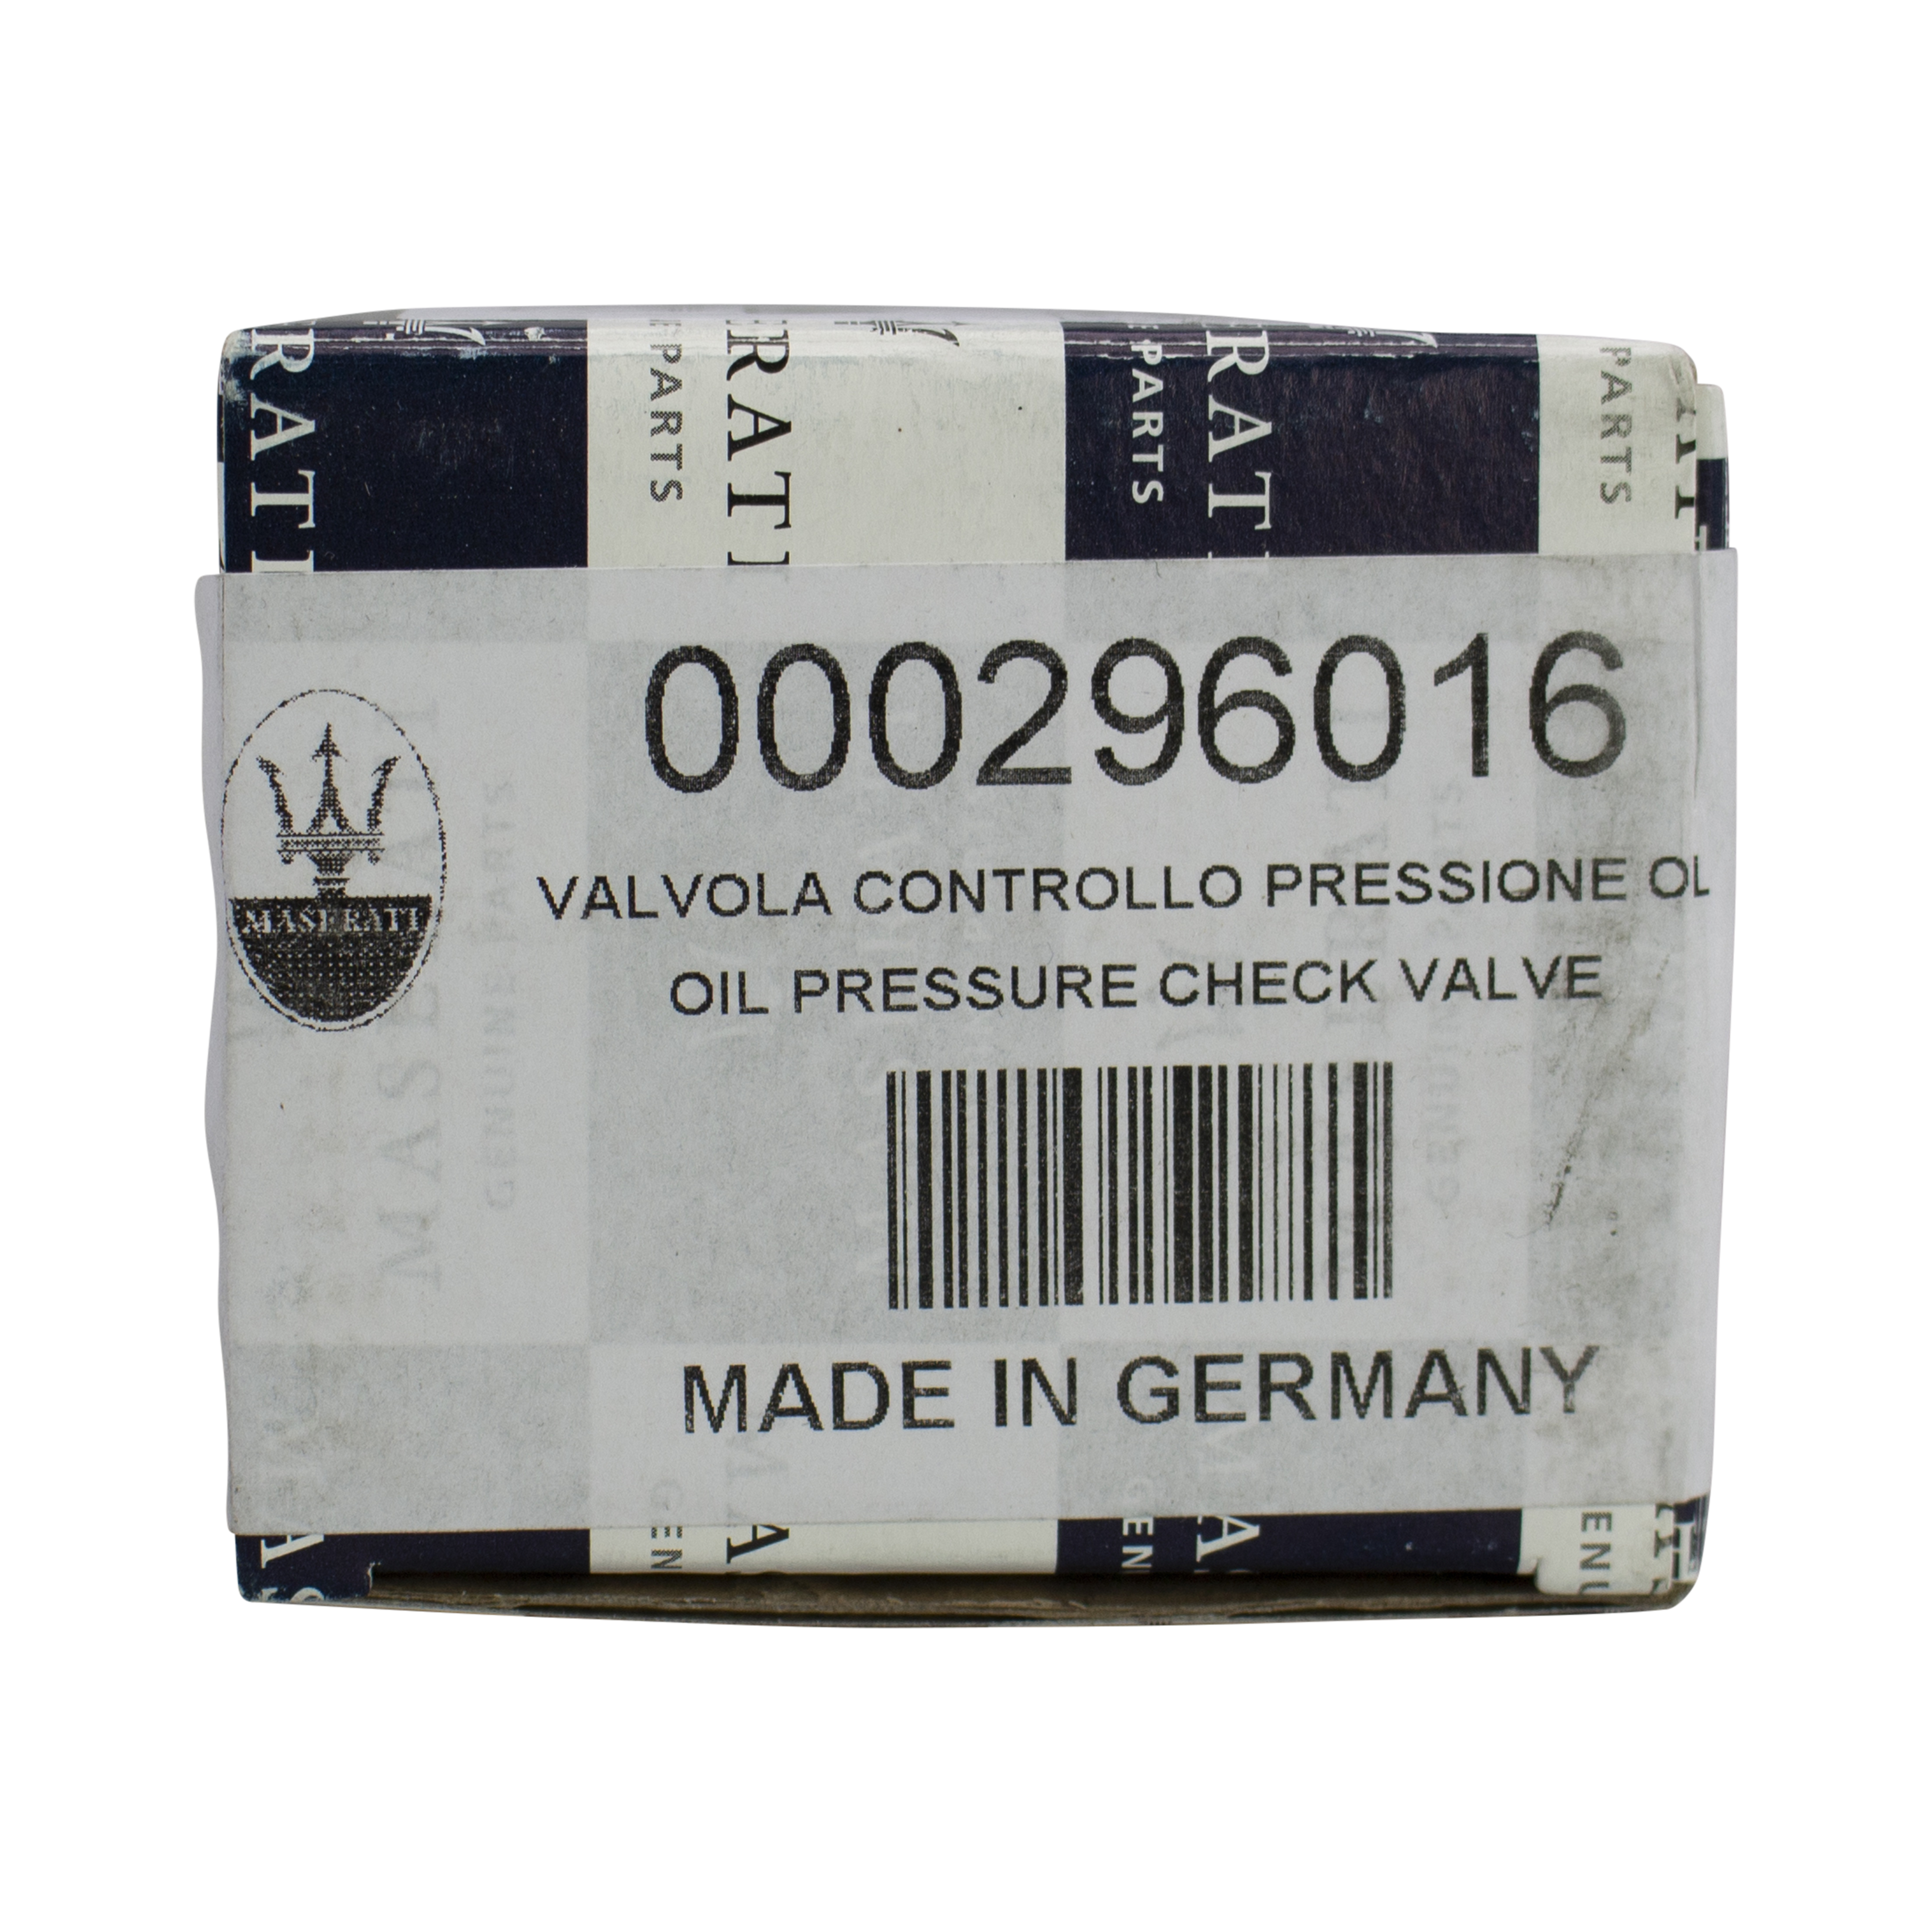 Maserati Oil Pressure Check Valve 296016